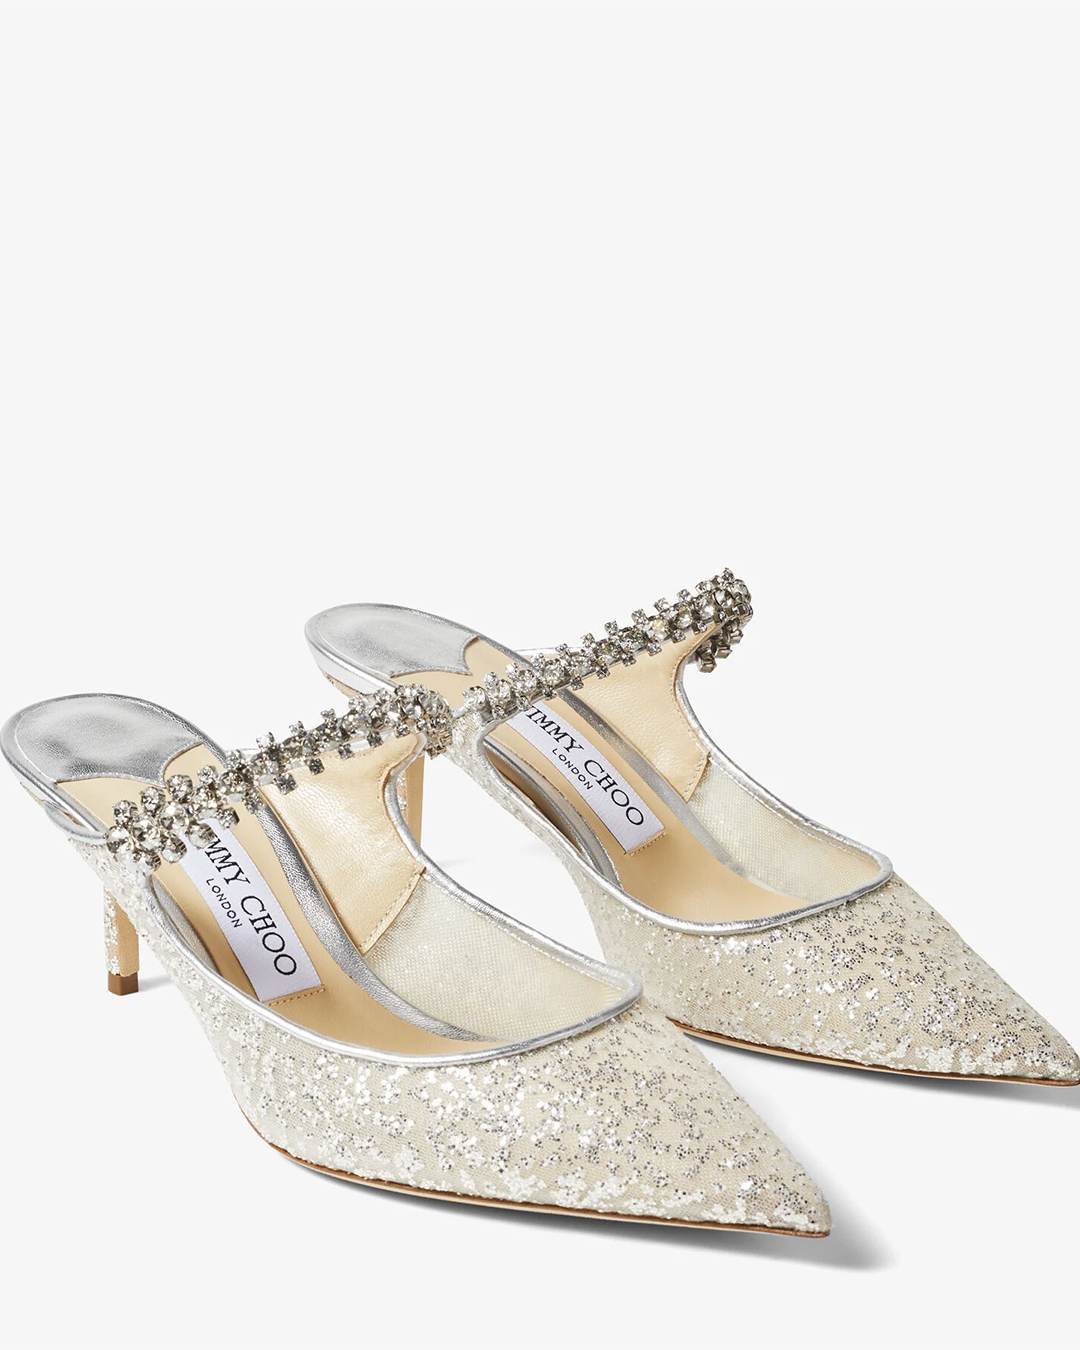 jimmy choo wedding shoes low heels silver pumps